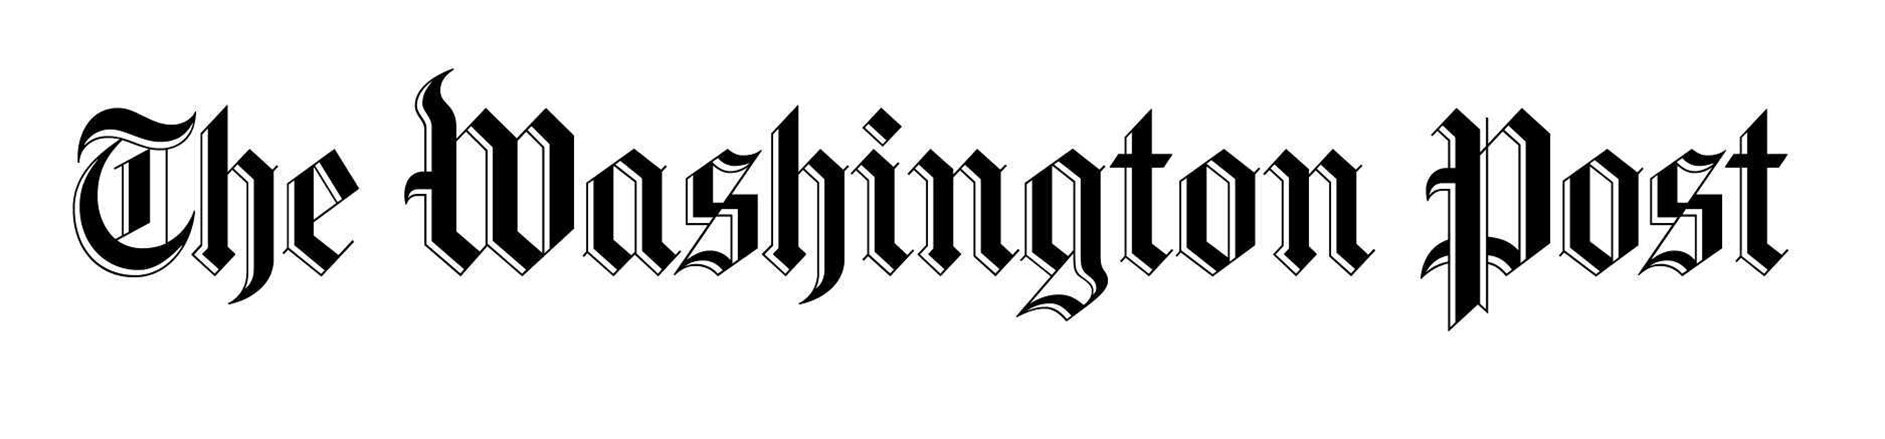 Washington-Post-logo.jpeg